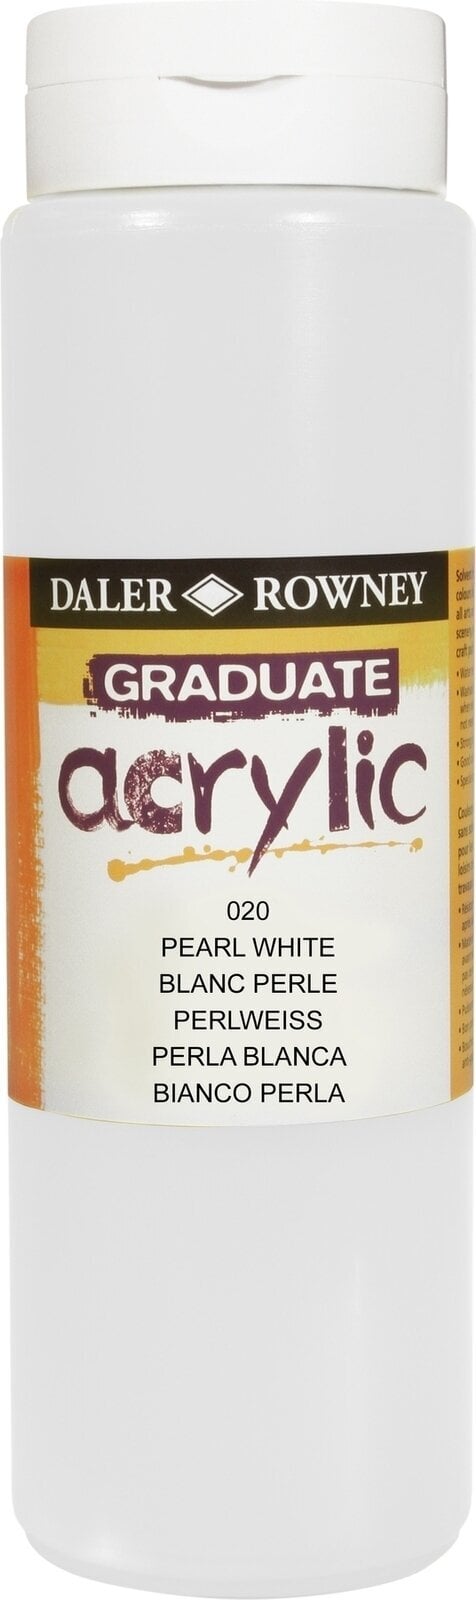 Akrylmaling Daler Rowney Graduate Akrylmaling Pearl White 500 ml 1 stk.